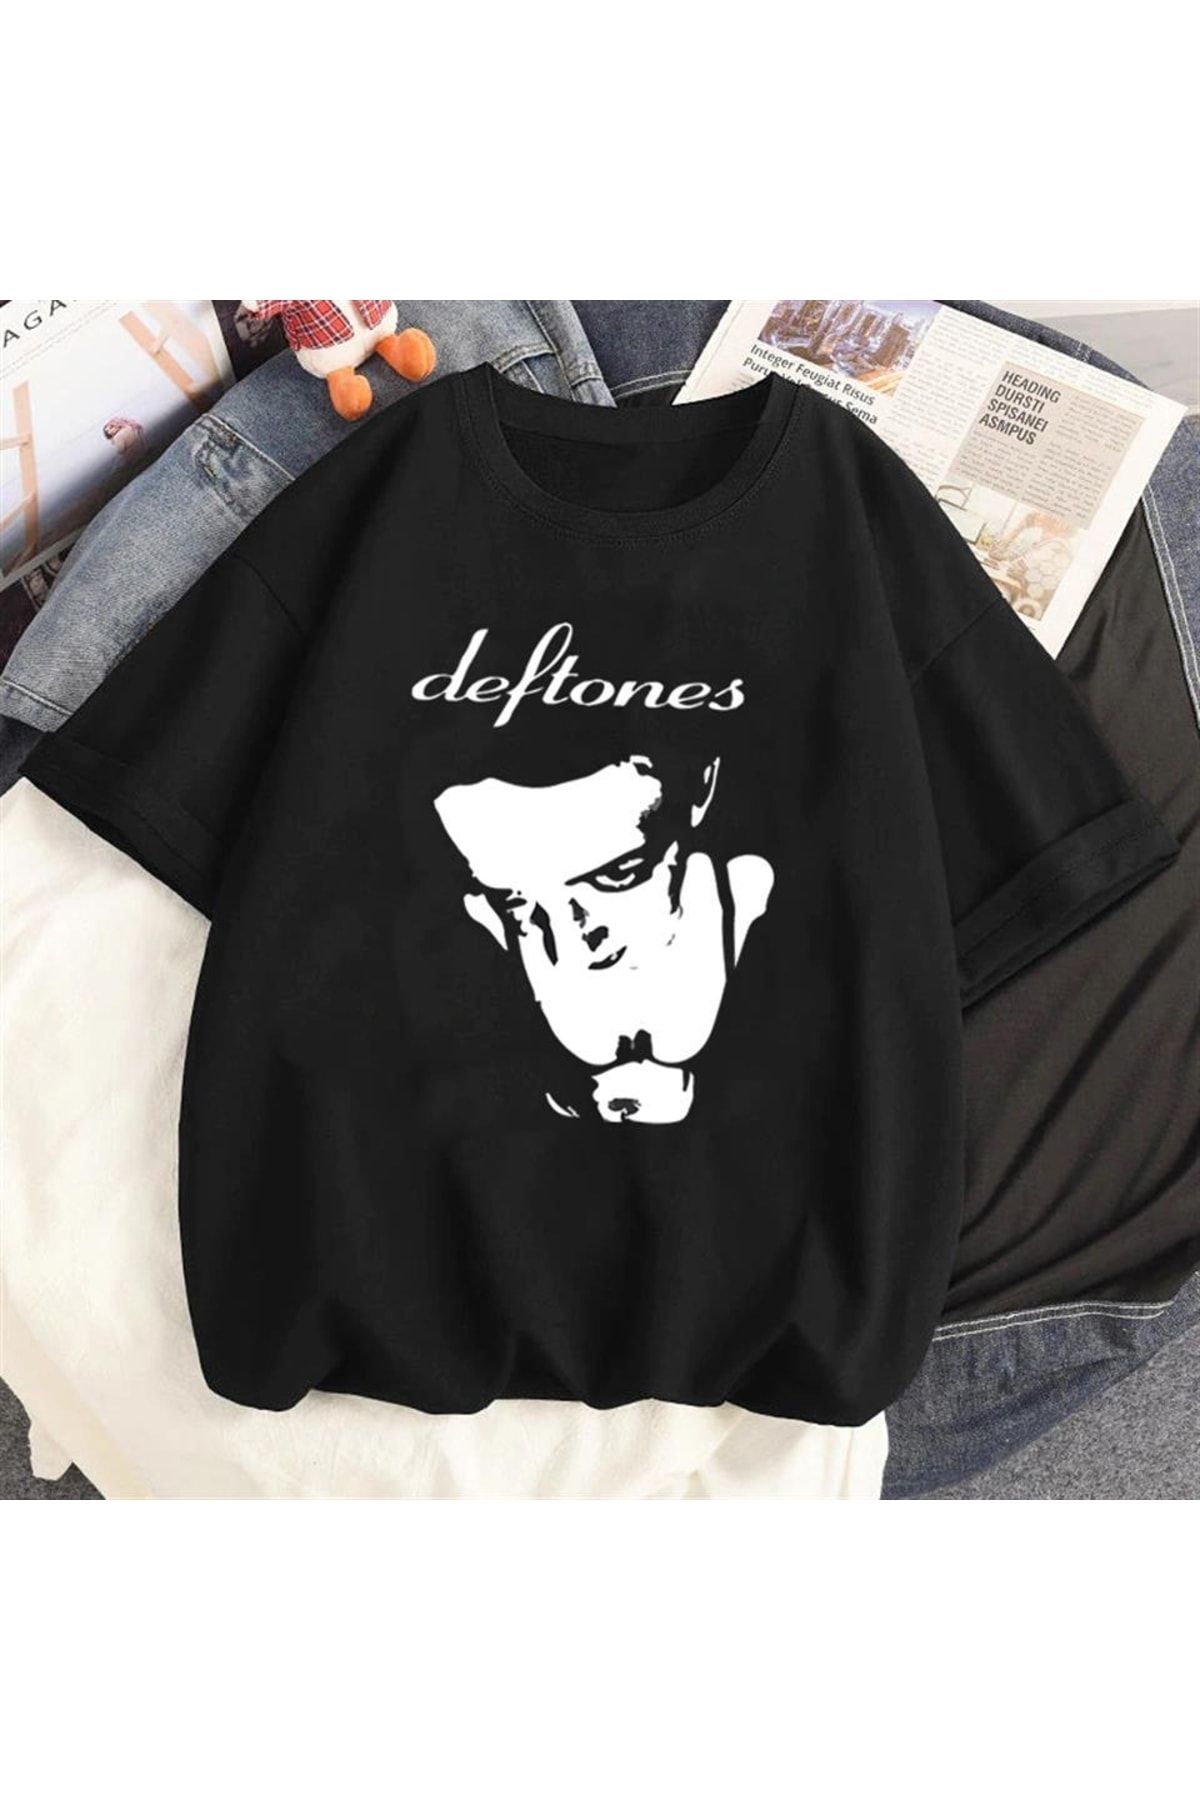 Touz zolid wear Deftones Printed Black Unisex Oversize T-shirt - Trendyol